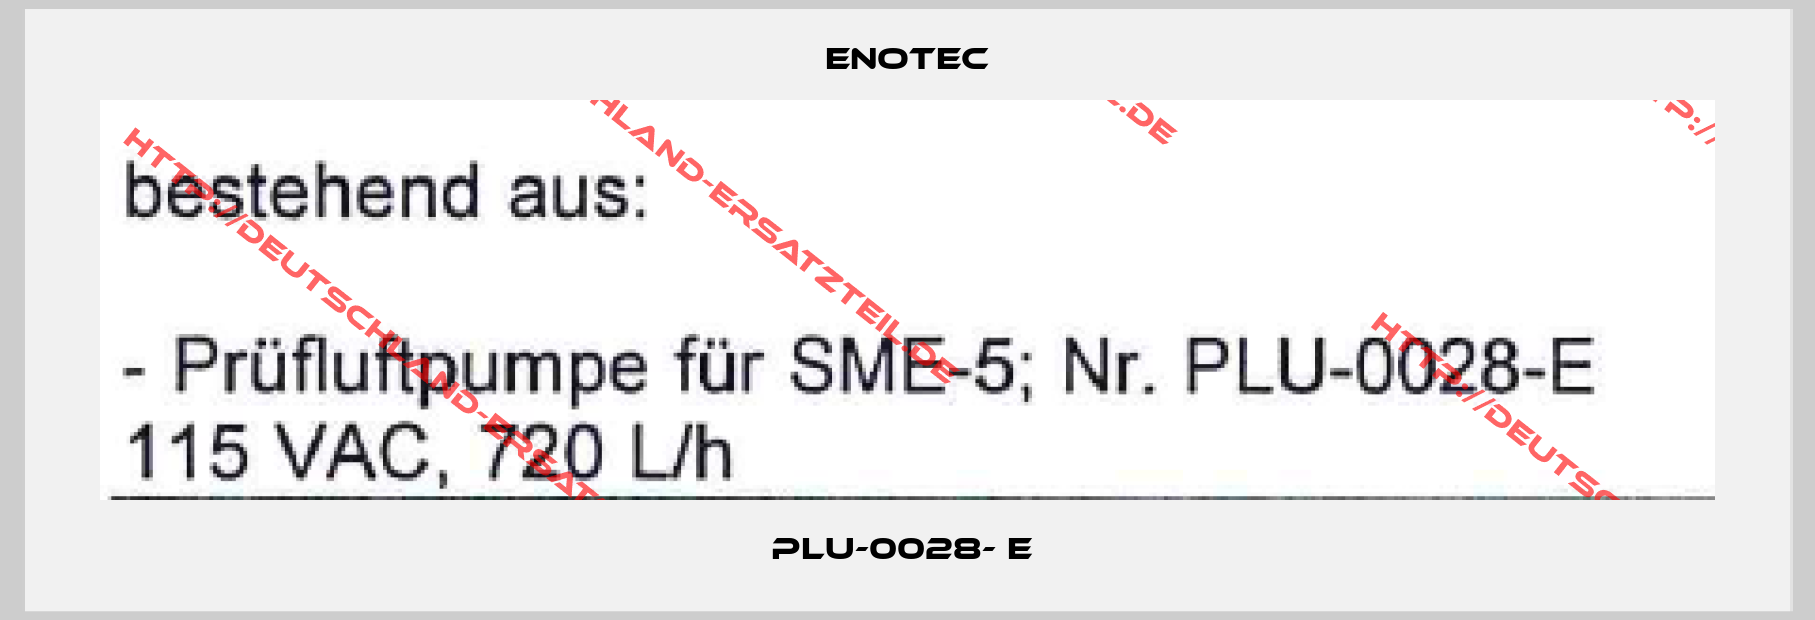 Enotec-PLU-0028- E 